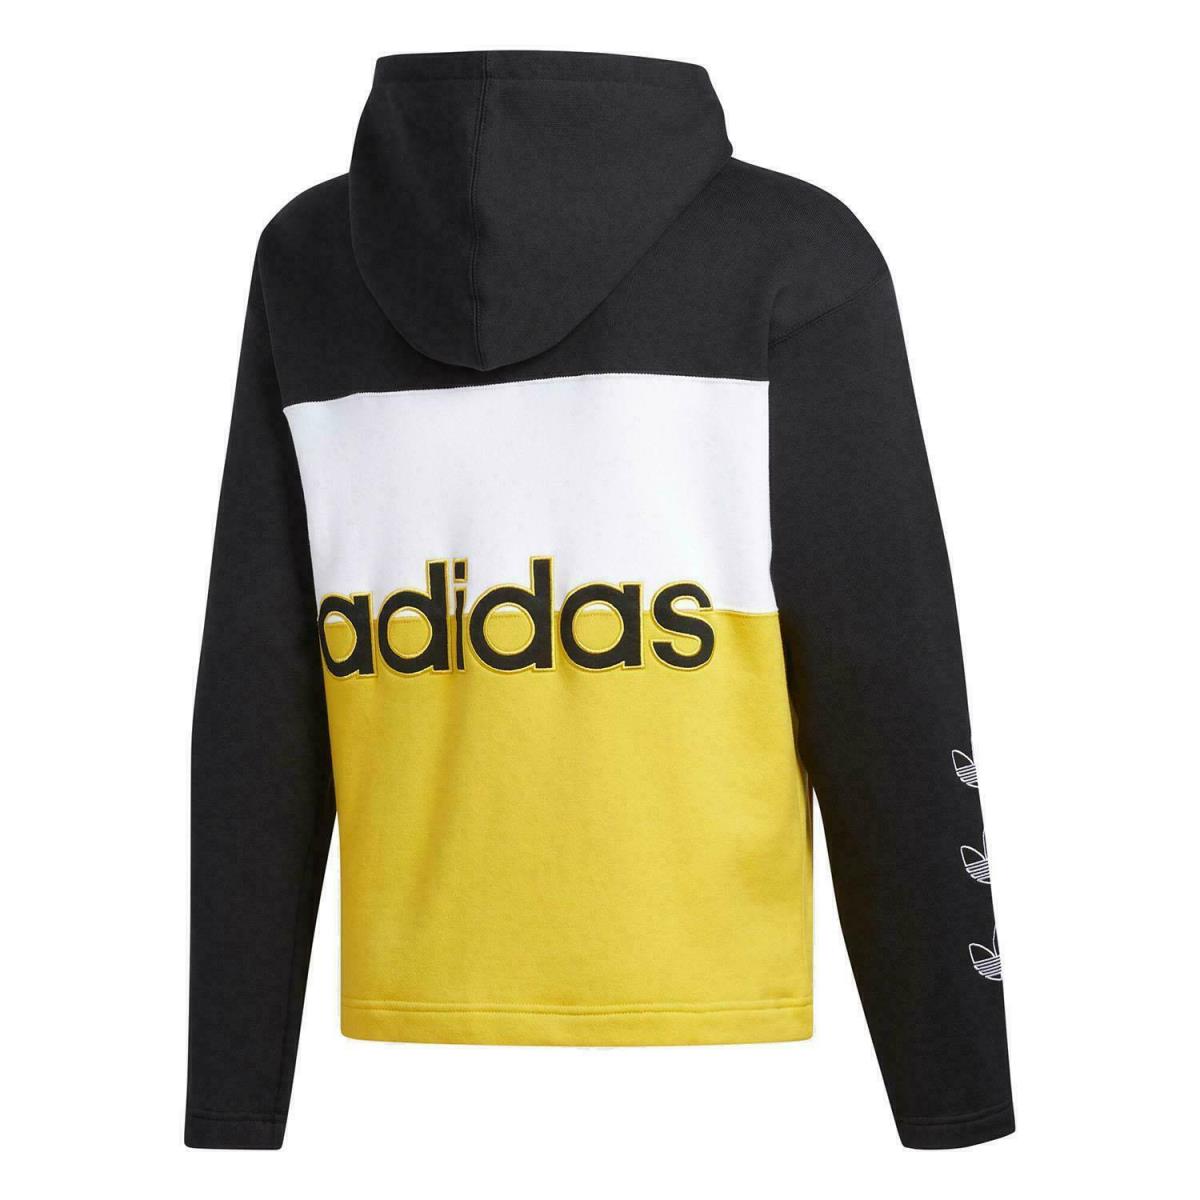 Adidas Originals Men`s S Full Zip Hoodie Trefoil Black White Yellow Warm Comfy